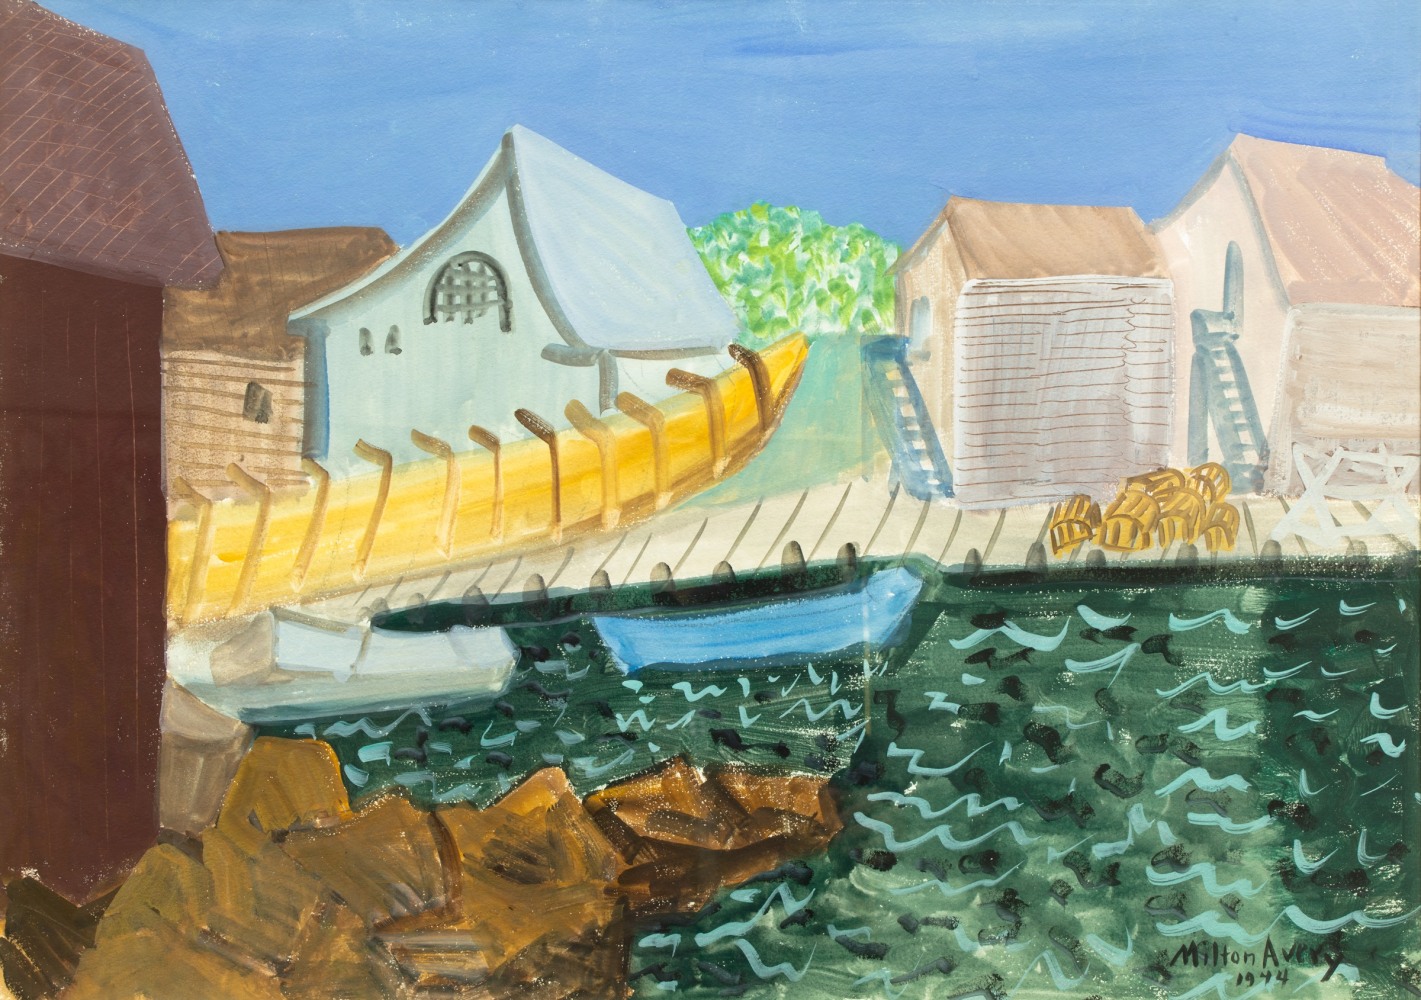 MILTON AVERY (1885-1965)

Fishing Harbor

1944

Gouache on paper

22 x 29 1/4 inches

55.9 x 74.3cm